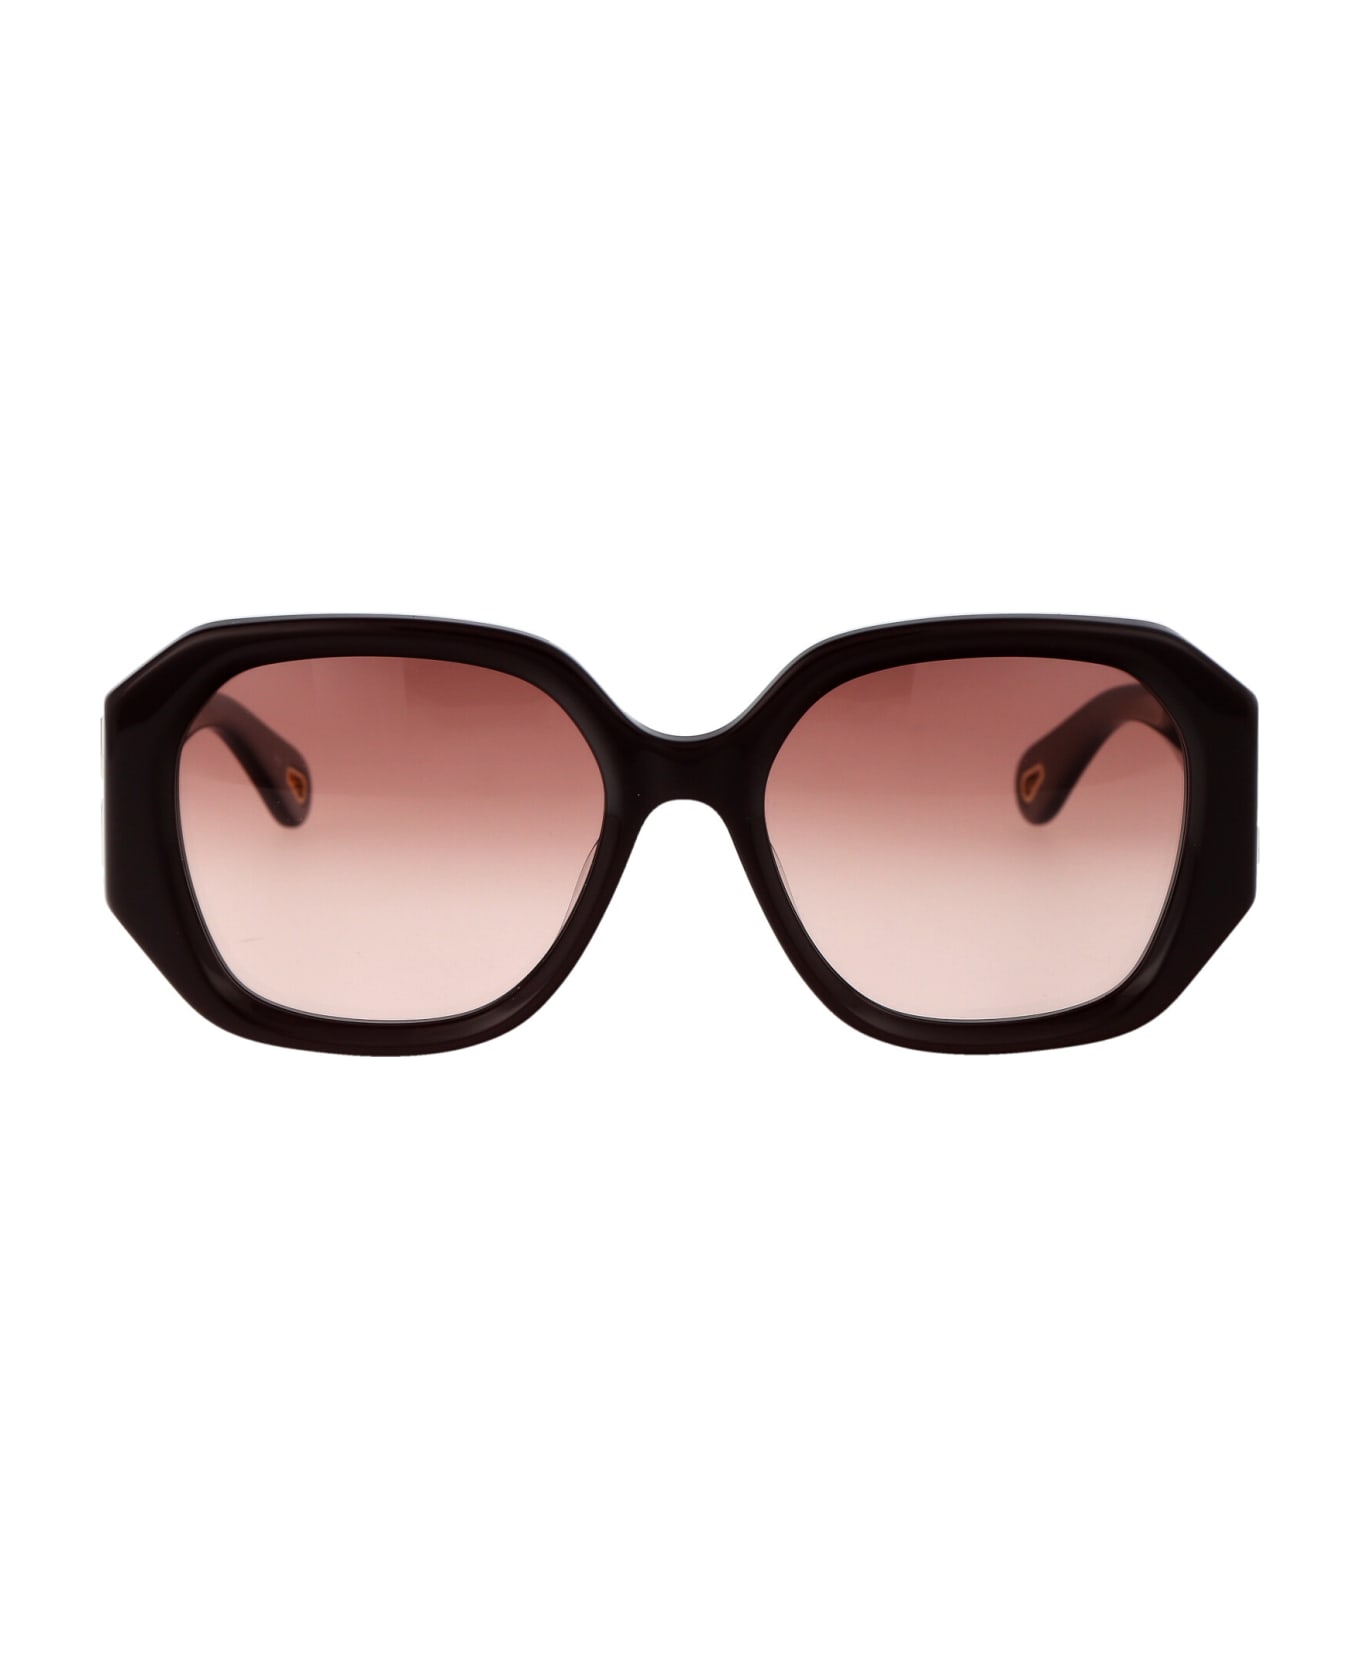 Chloé Eyewear Ch0236s Sunglasses - 003 BURGUNDY BURGUNDY ORANGE